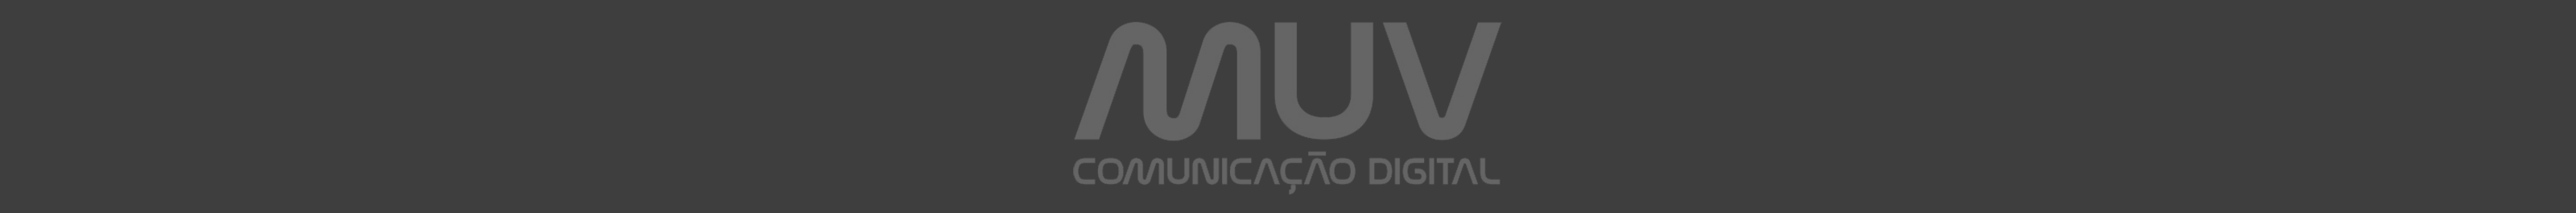 Agência Muv's profile banner